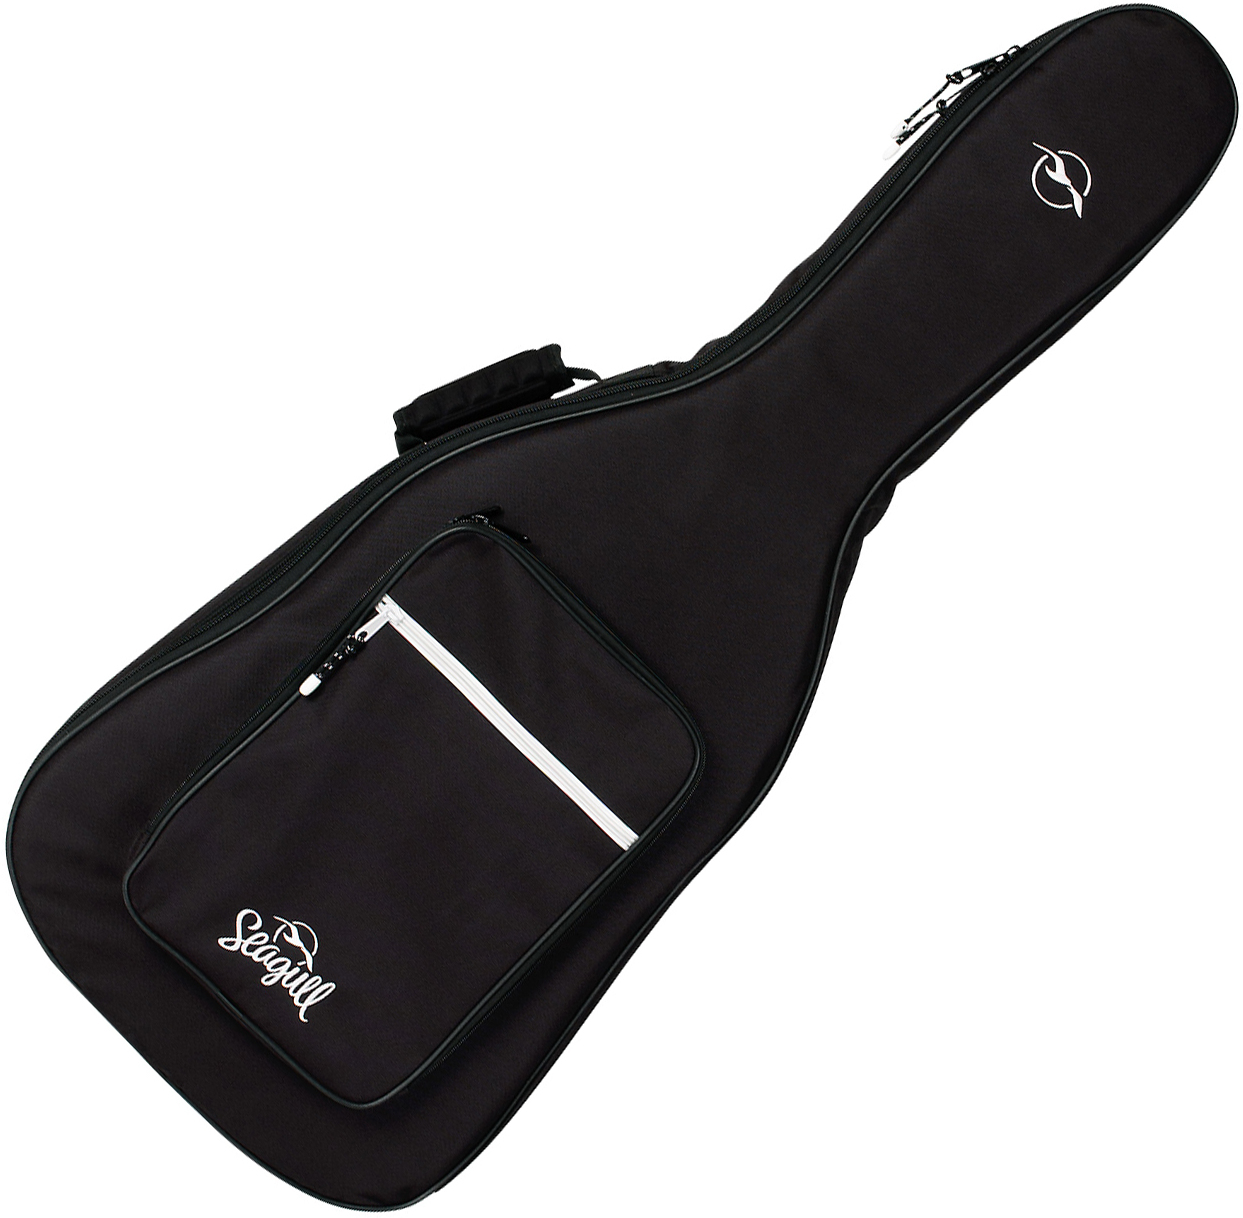 Seagull Standard Folk/concert Hall Guitar Gig Bag - Acoustic guitar gig bag - Main picture